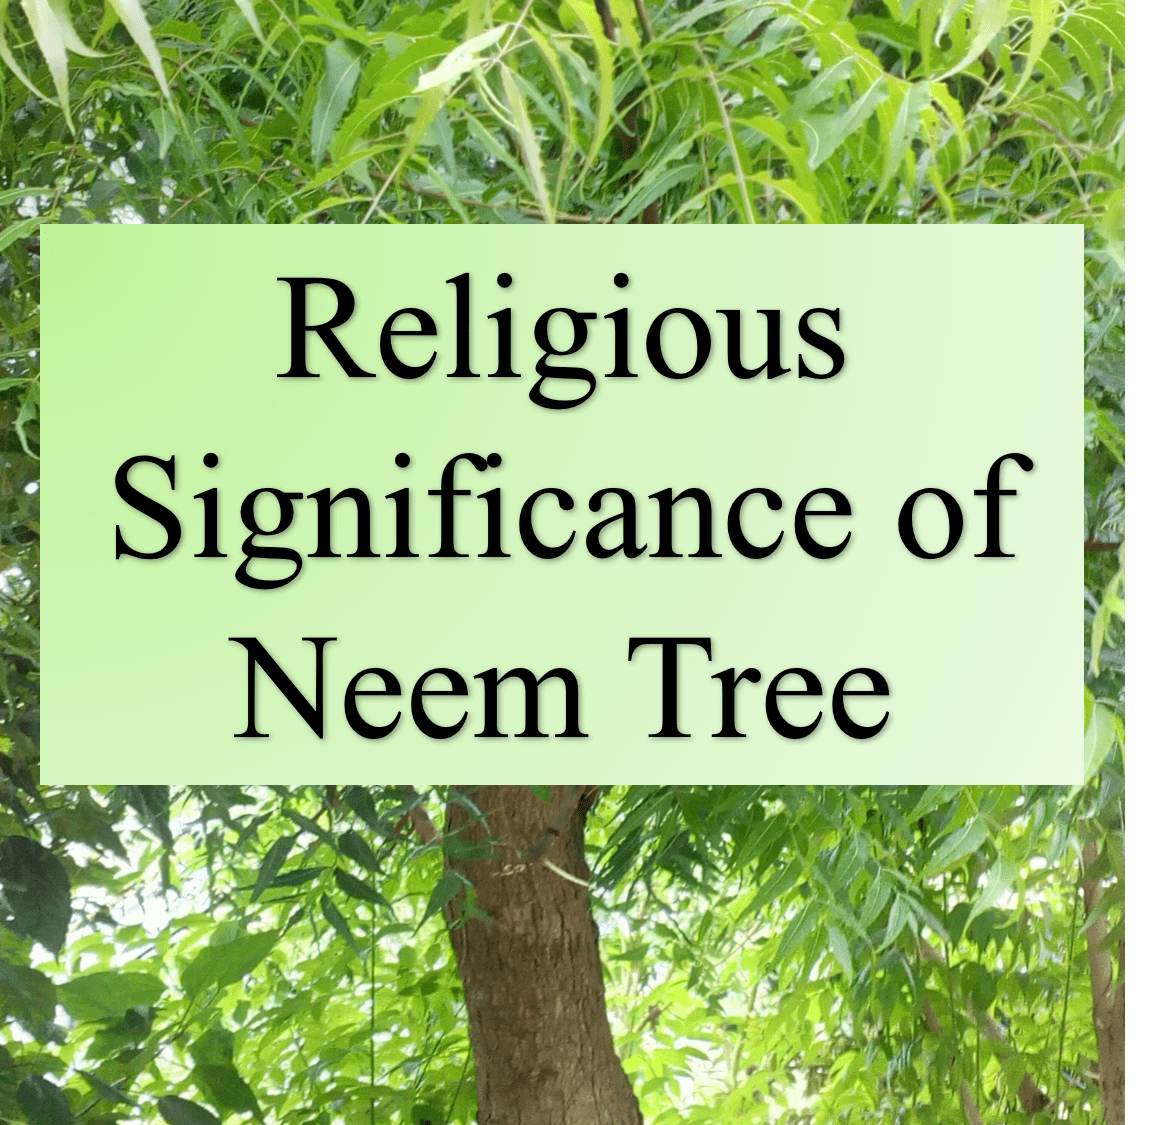 Religious Significance of Neem Tree